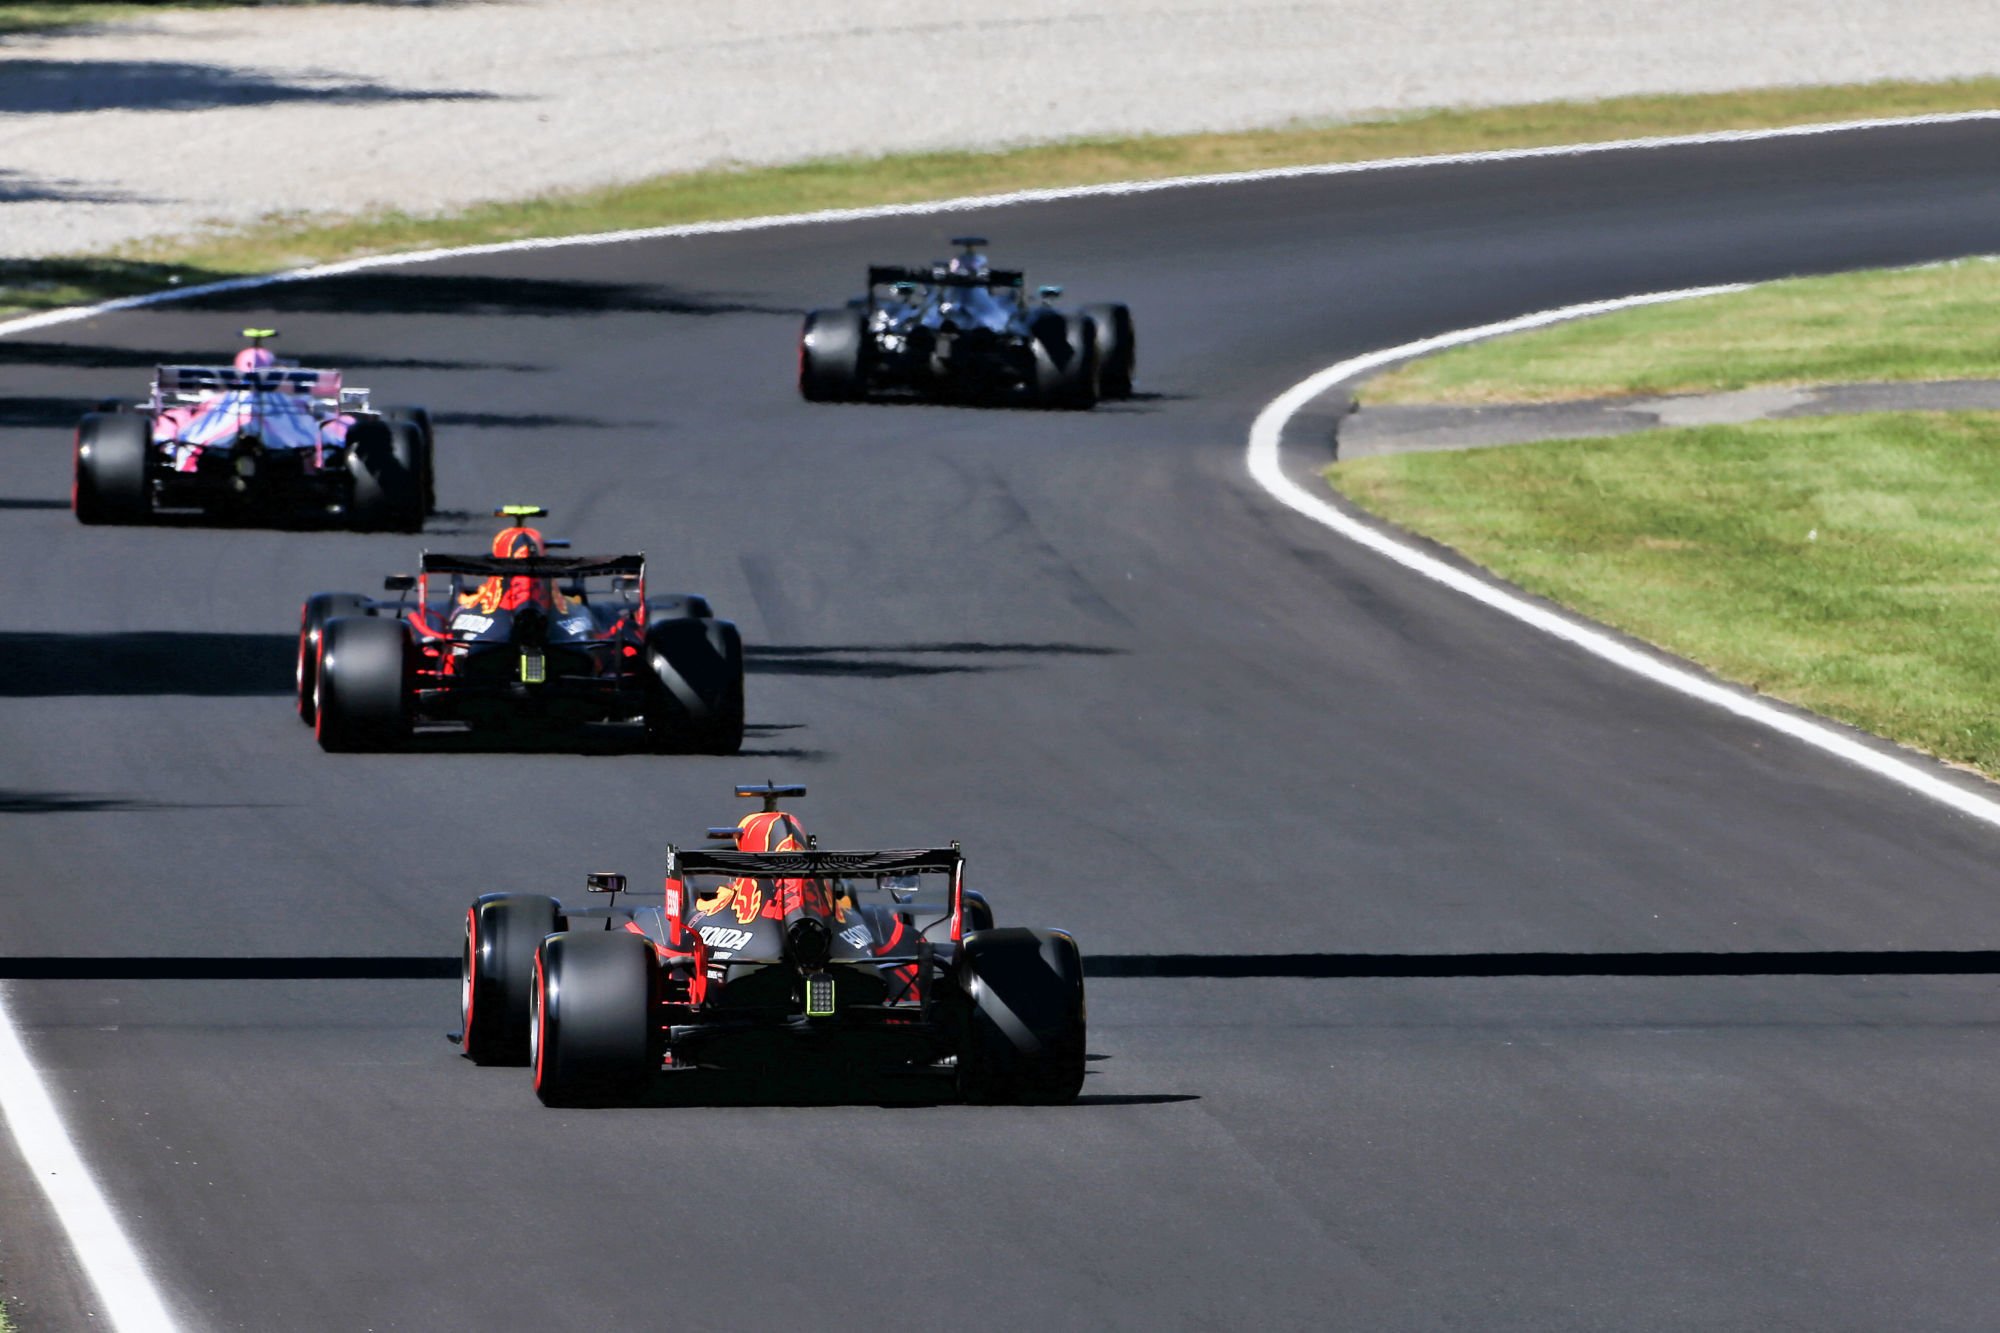 GP Italie - Formule 1
By Icon Sport